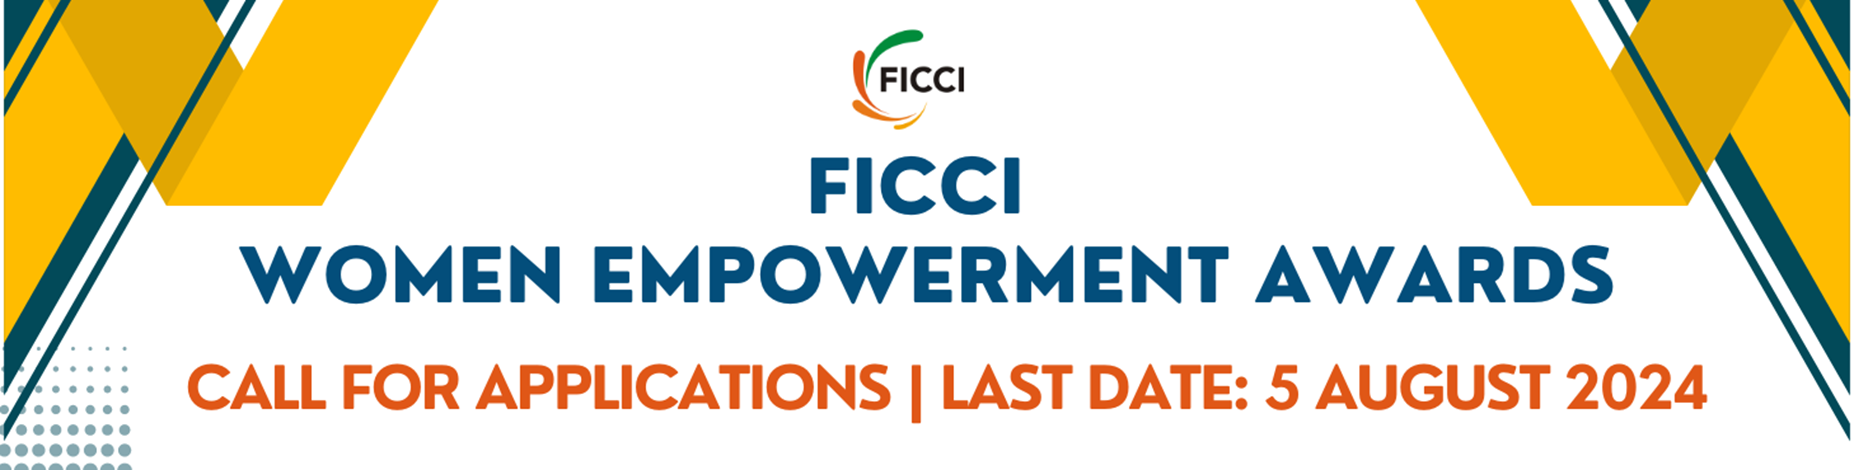 Call For Applications: FICCI Women Empowerment Awards